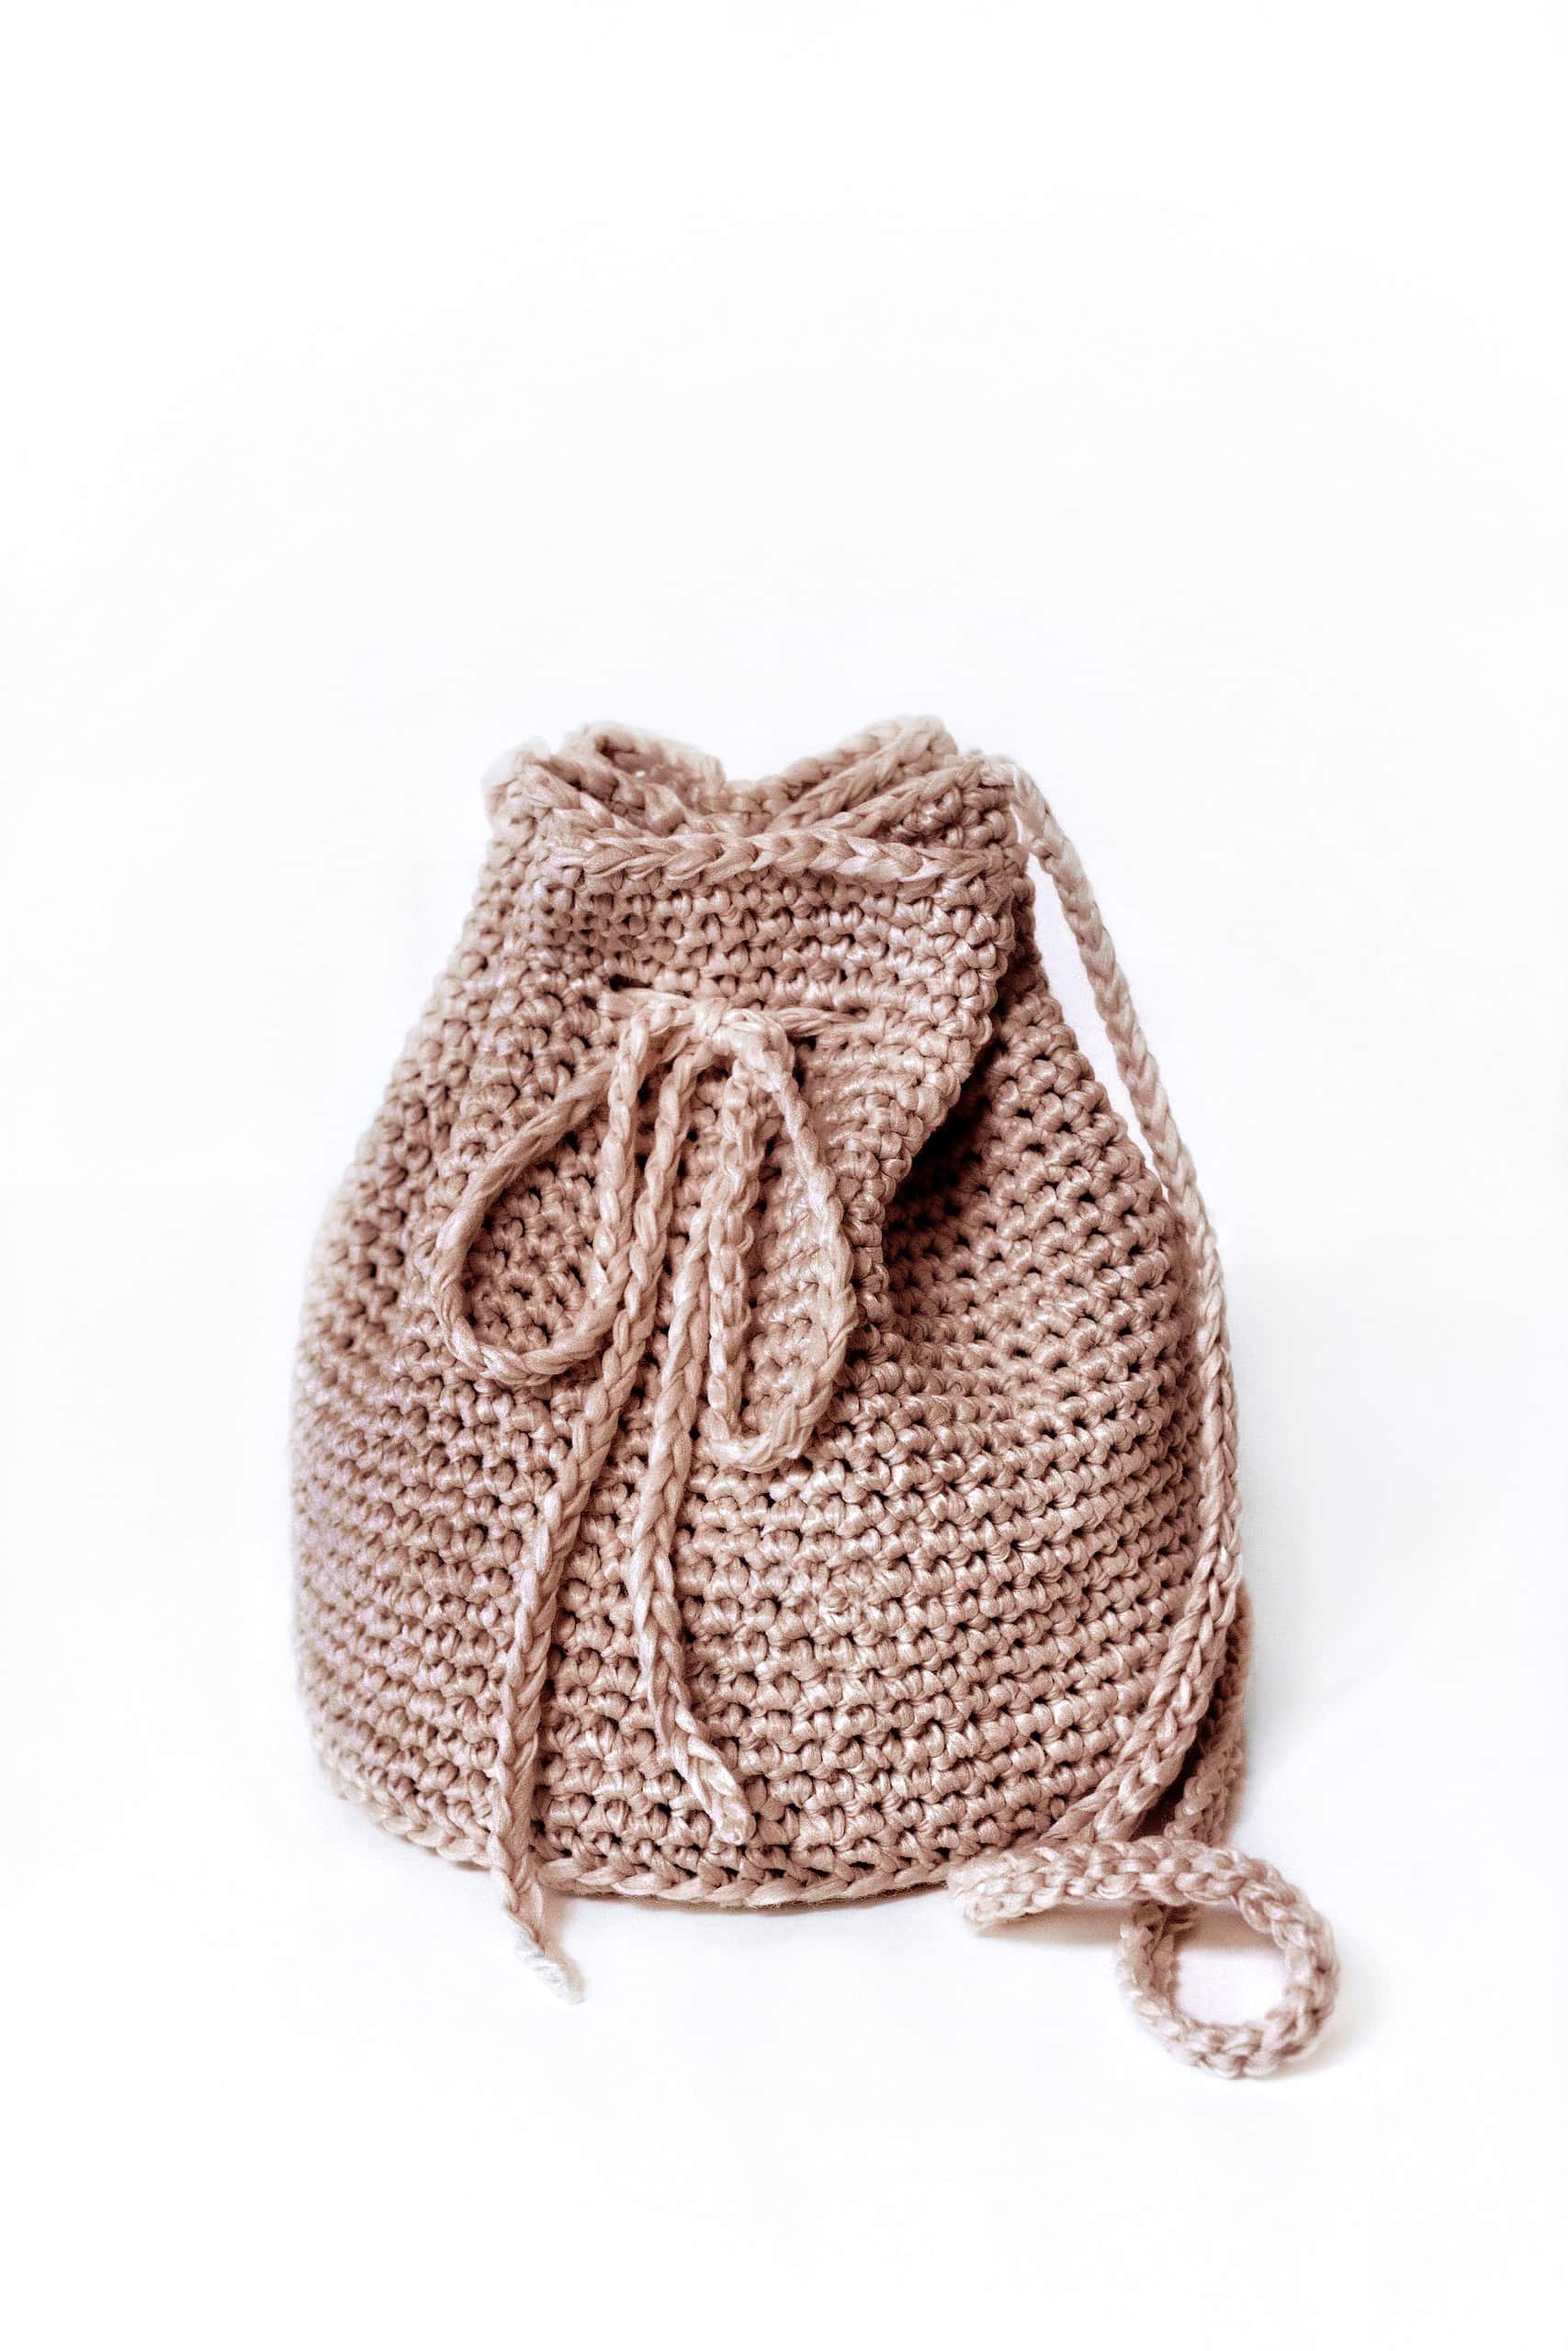 Amazon.com: TXIN 6 Pcs Round PU Leather Bag Bottom Knitting Crochet Bags  Bottom Shaper Pad Hand-Woven Bag Cushion Base with Holes for DIY Handbag  Shoulder Bags Purse Making Supplies Bottom Base (6